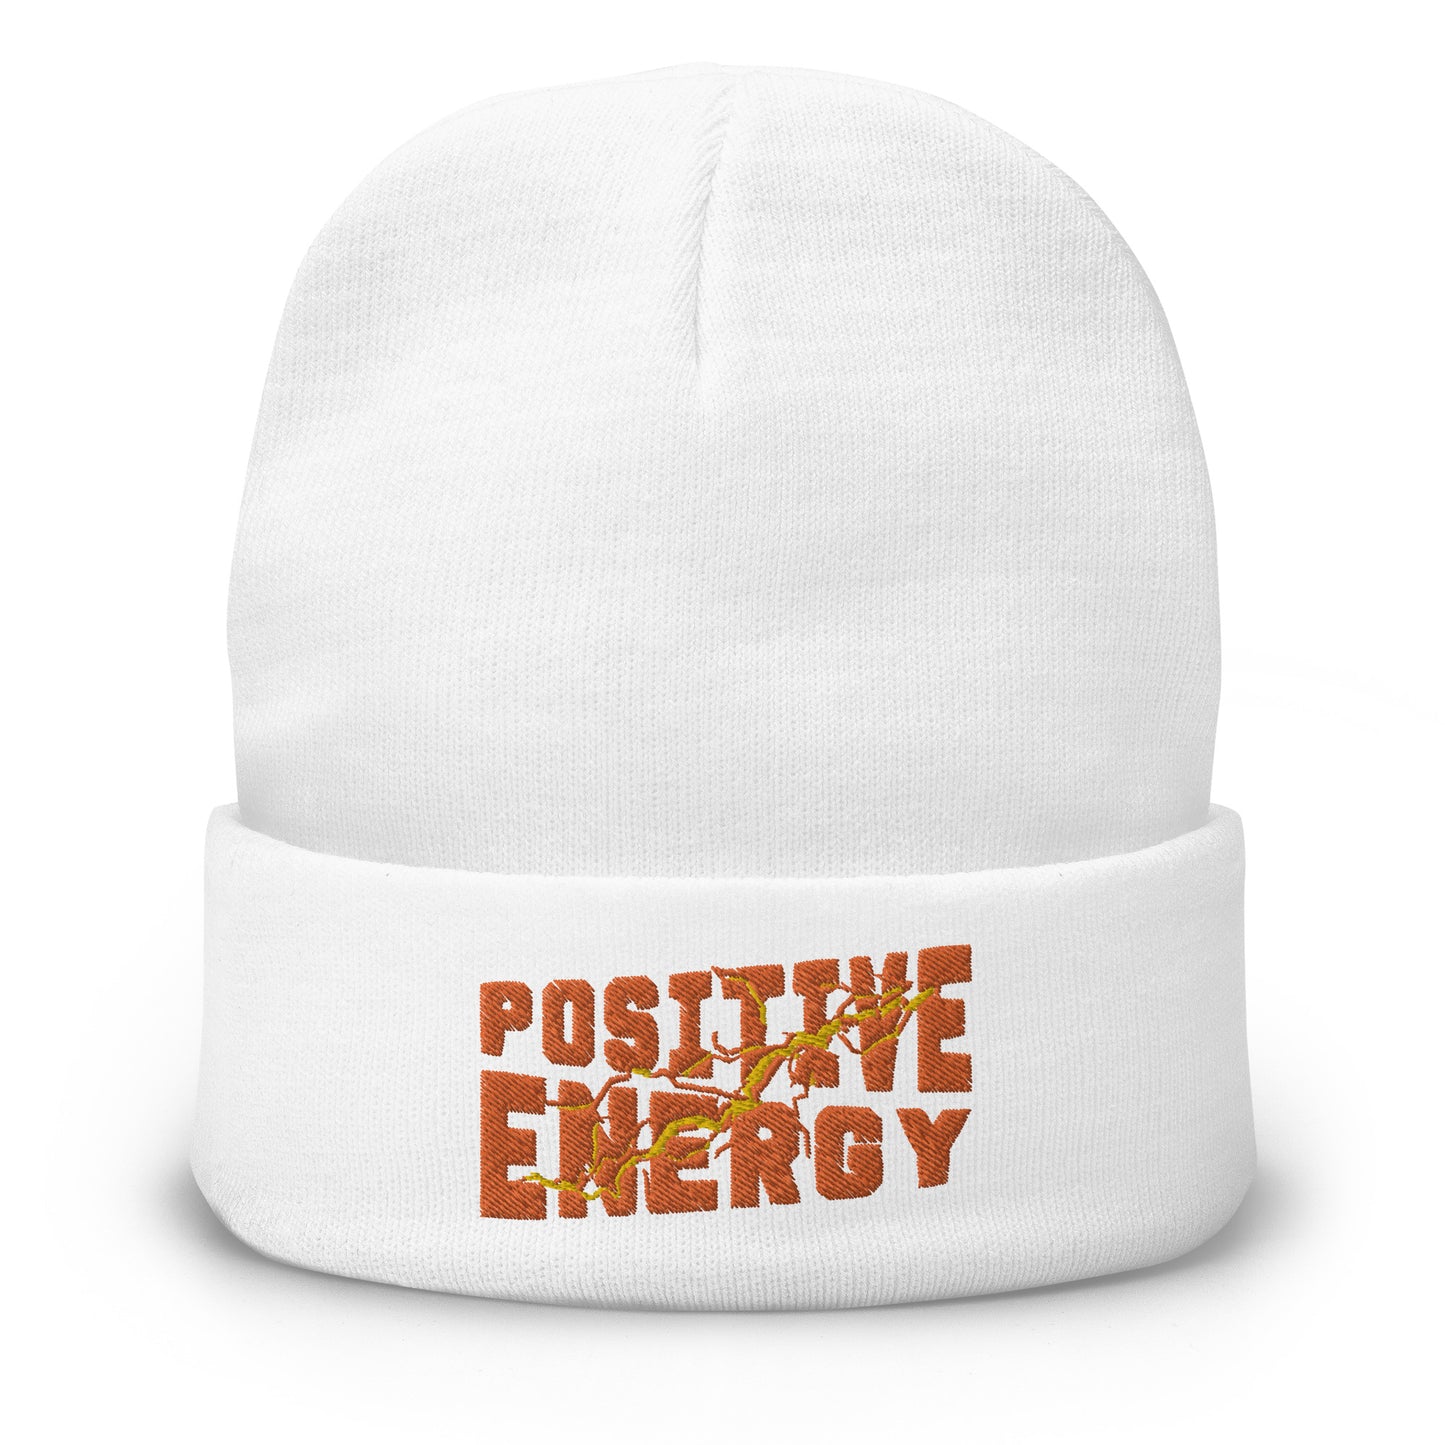 Positive Energy - Beanie - JayMayOnline eStore